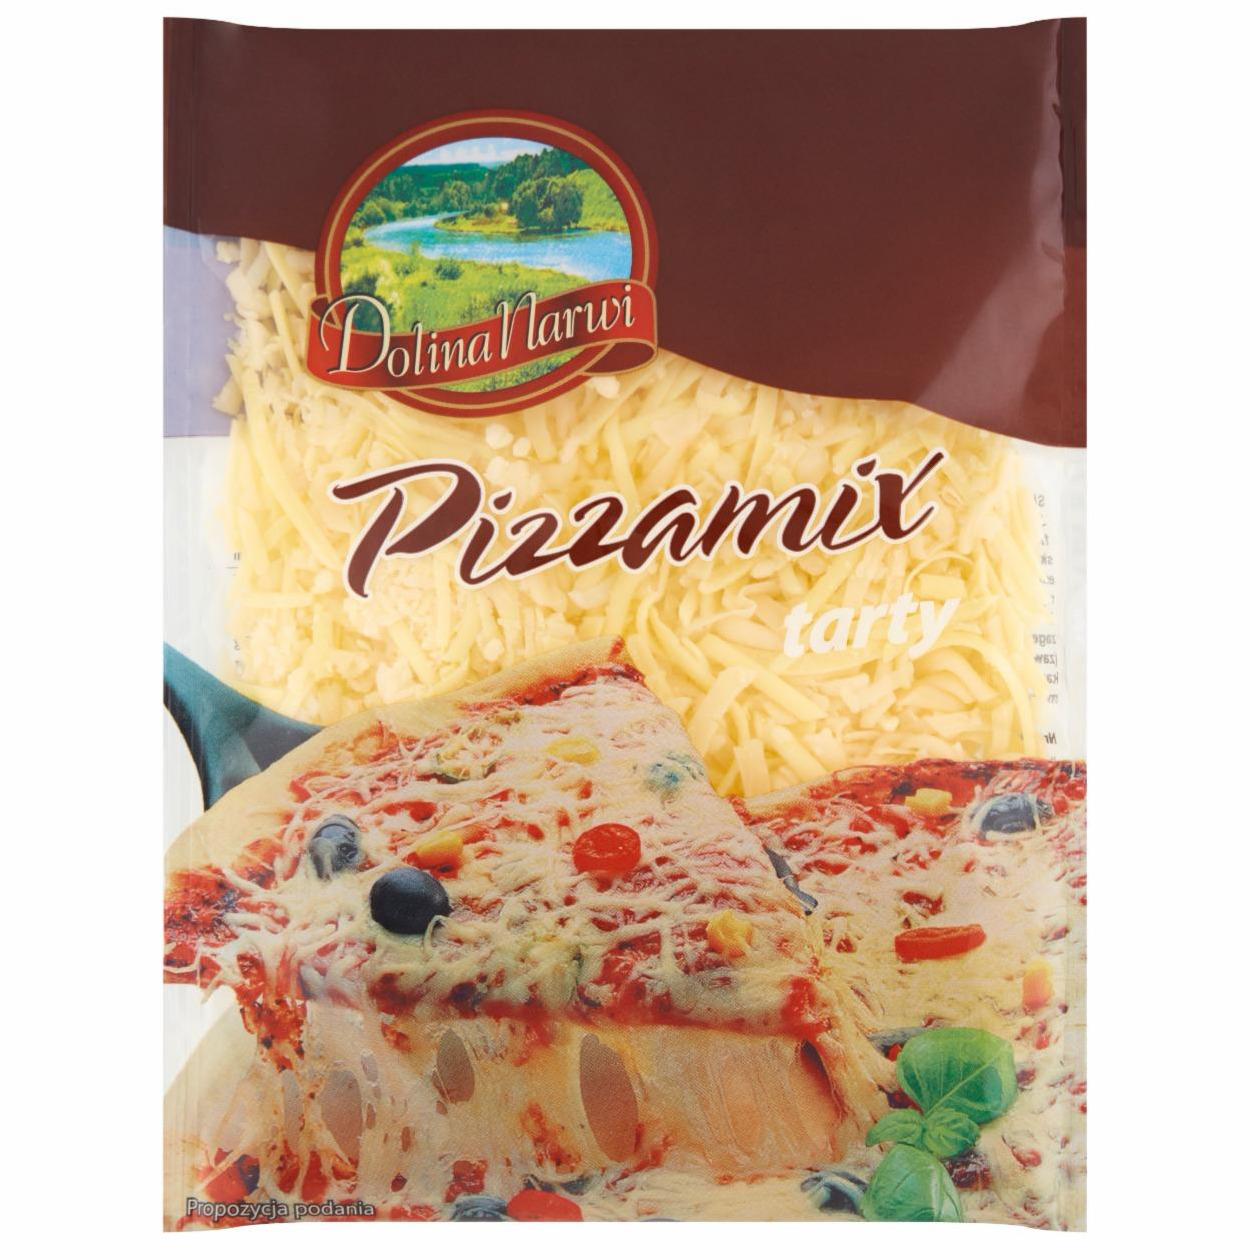 Photo - Dolina Narwi Pizzamix Grated Cheese-Like Product 150 g